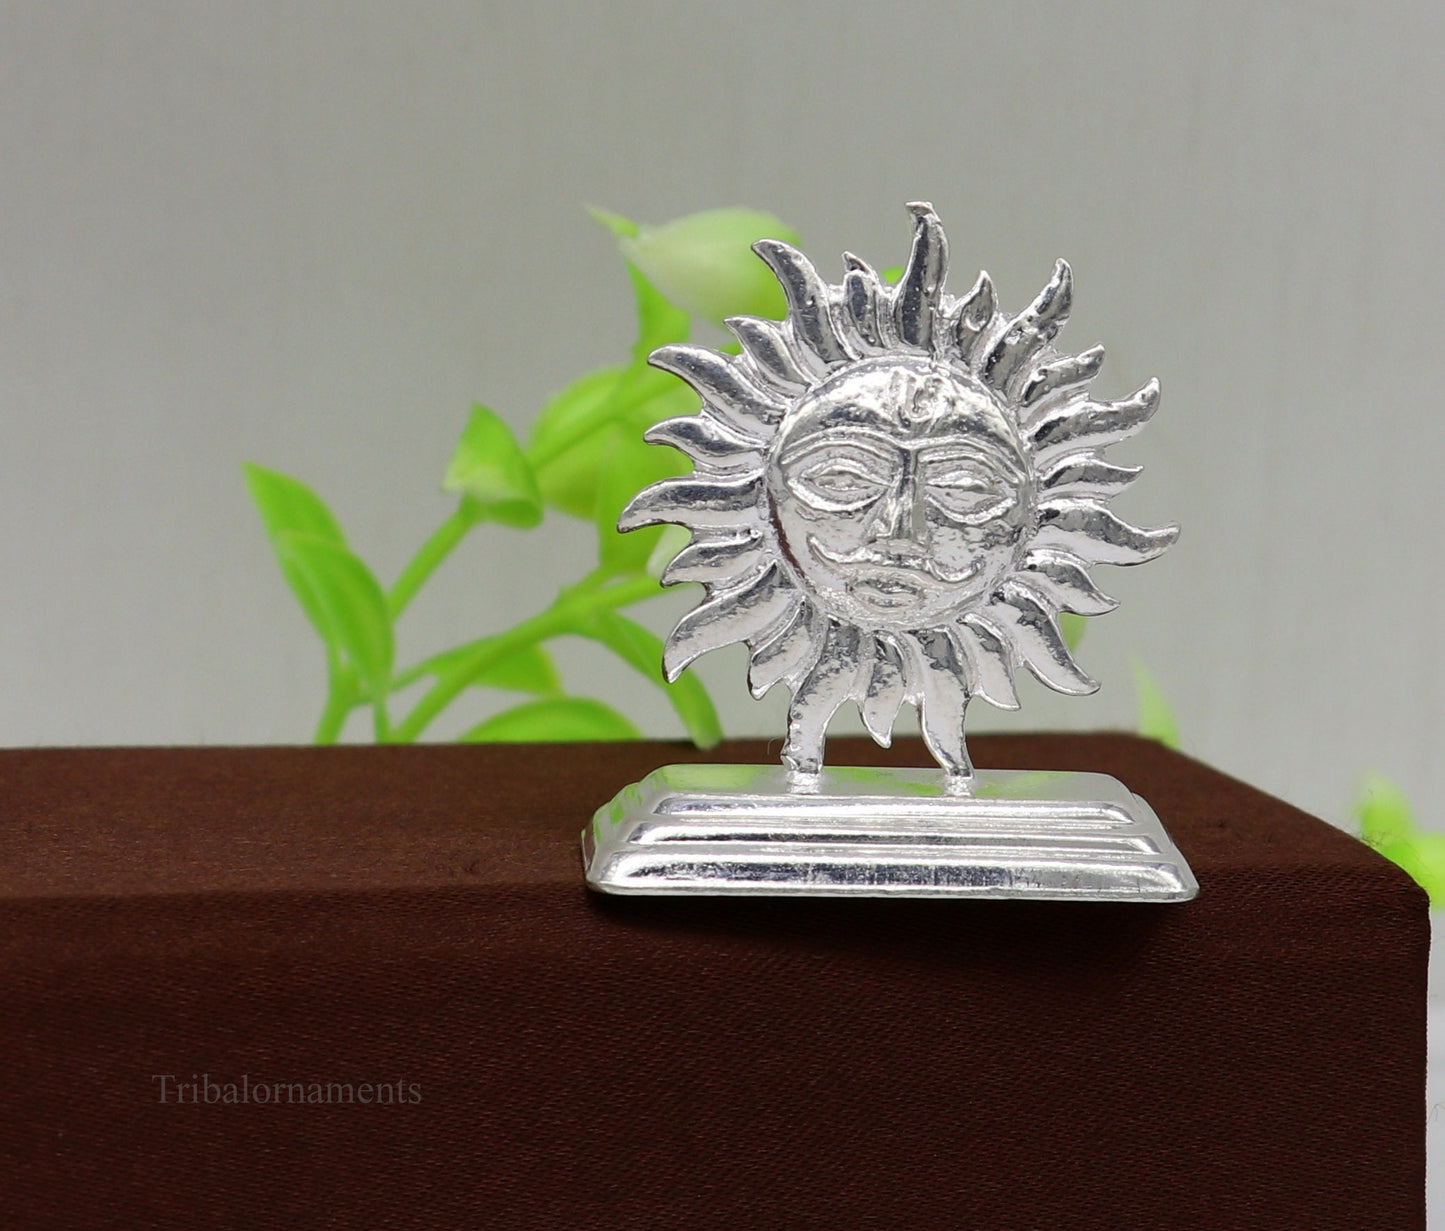 Sterling silver handmade design Indian Idols sun ro suraj statue figurine, puja articles decorative gift diwali puja art52 - TRIBAL ORNAMENTS